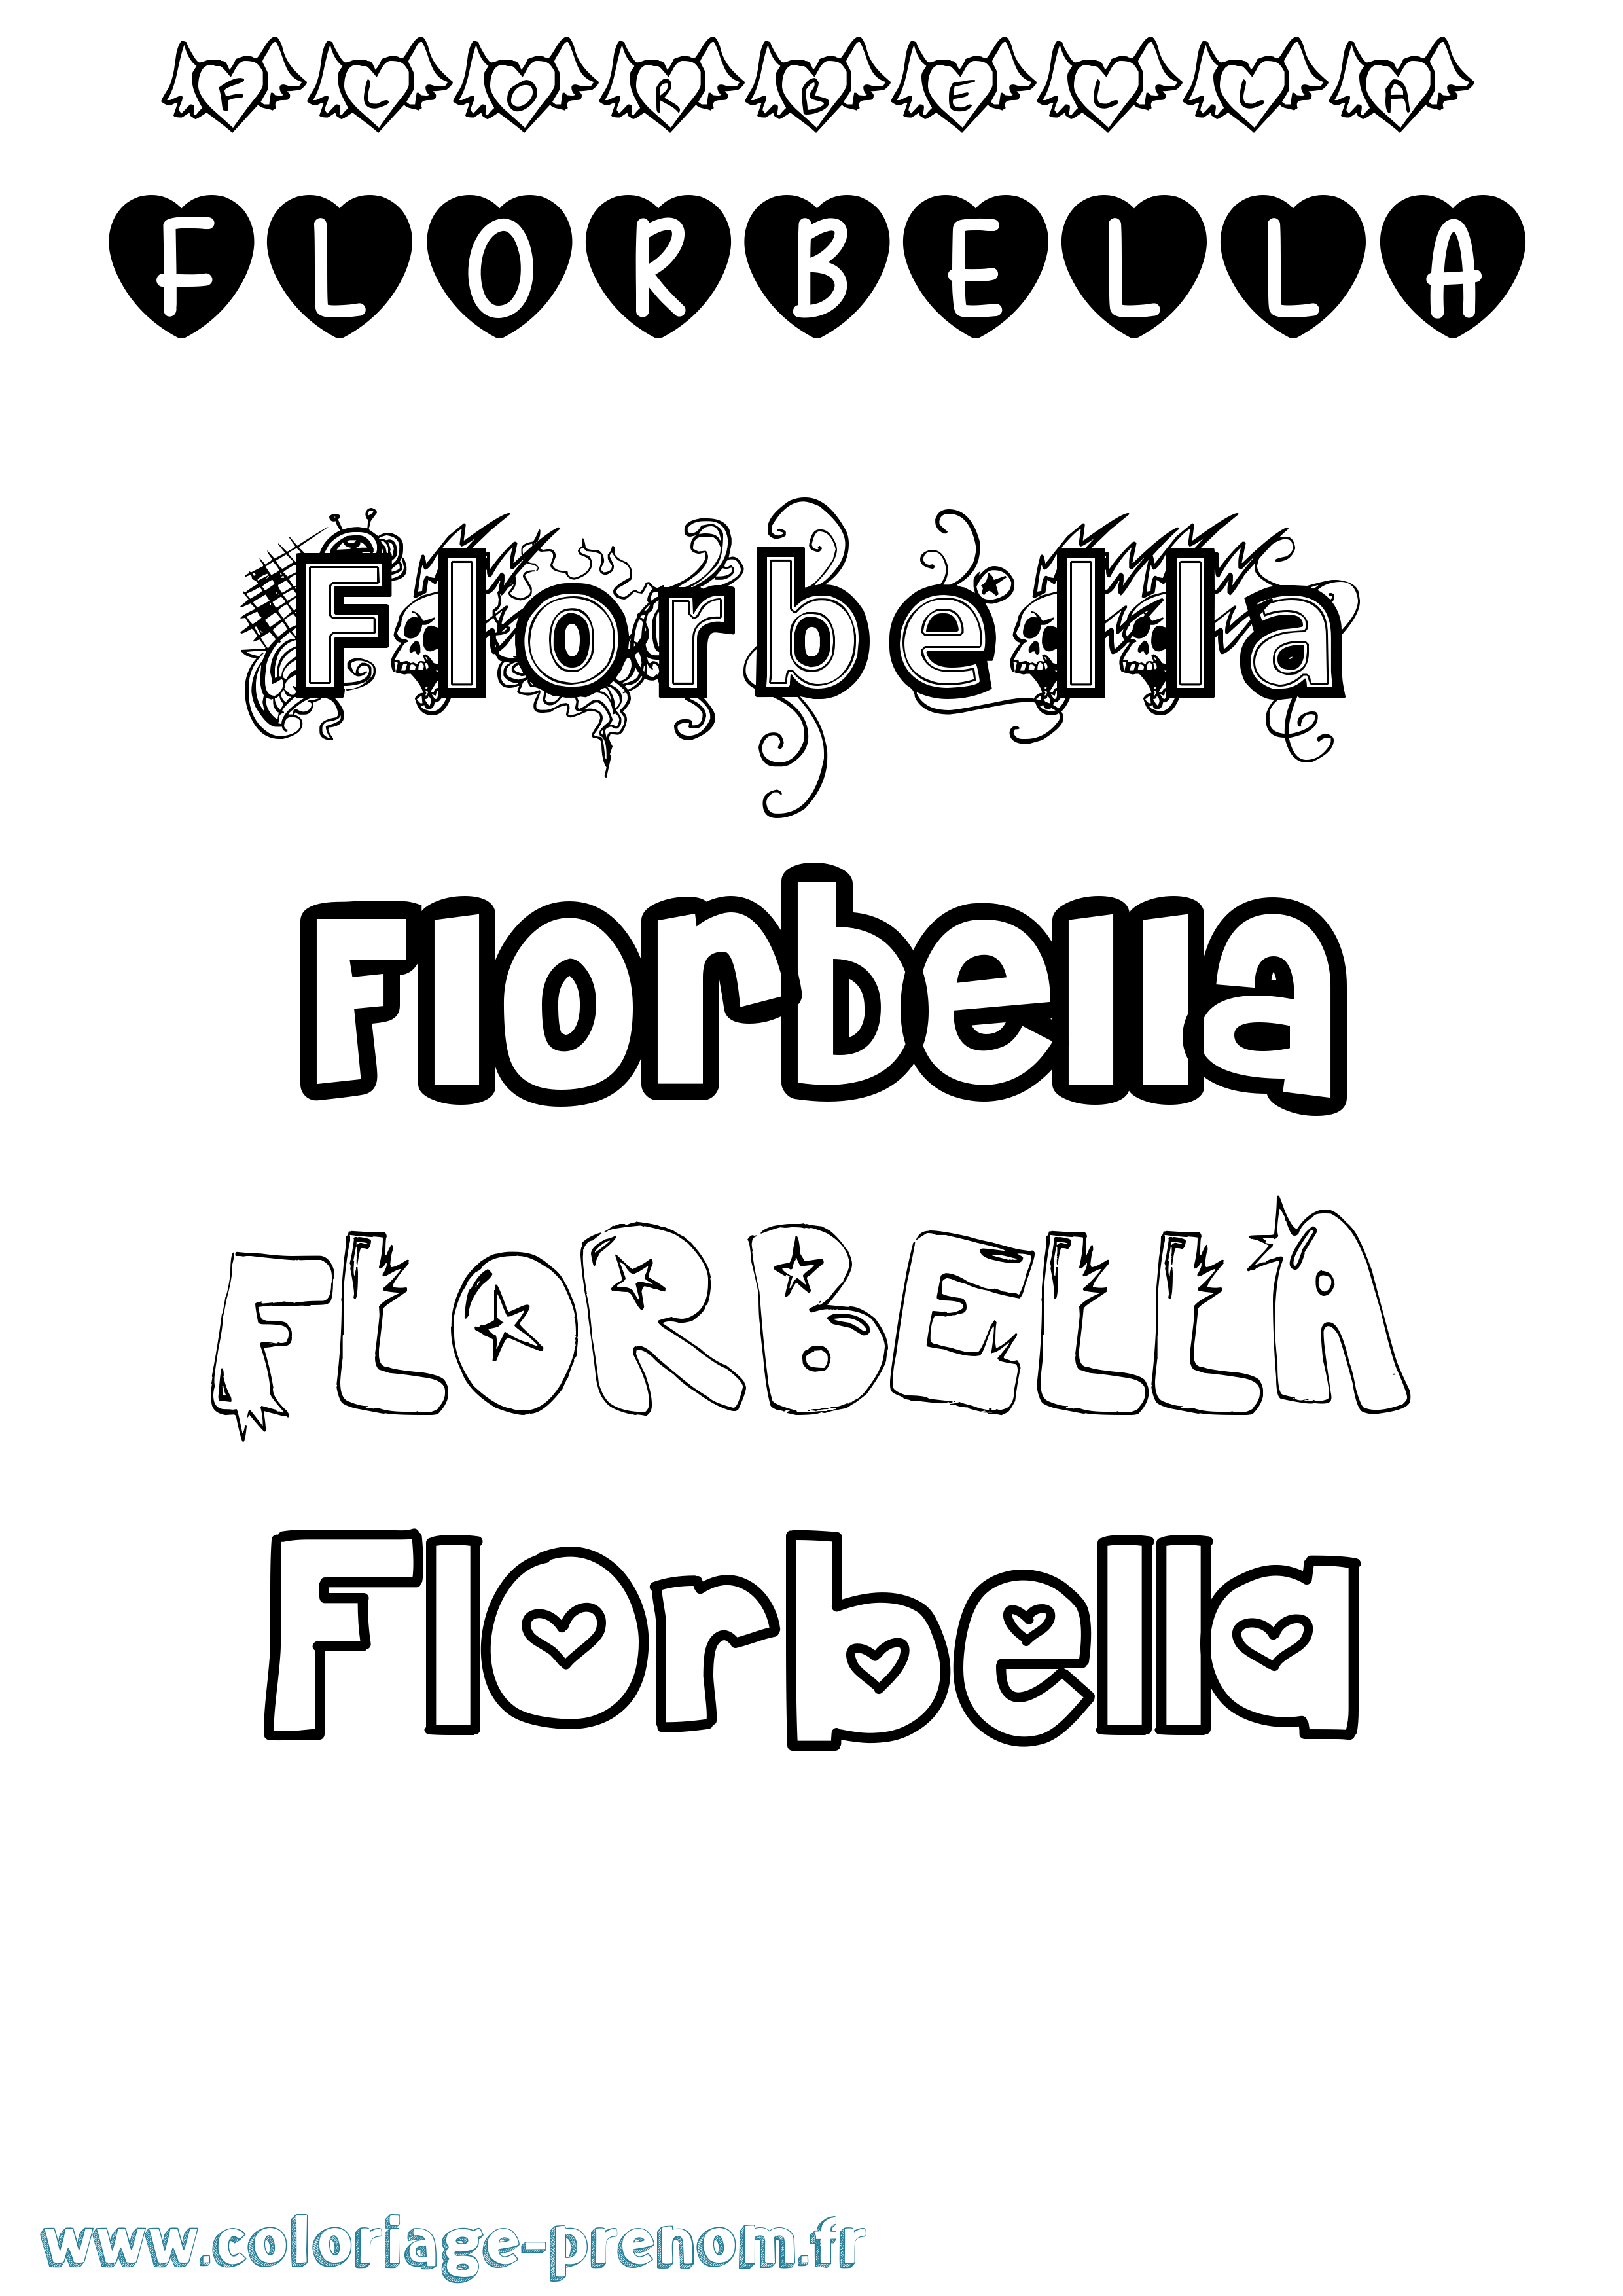 Coloriage prénom Florbella Girly